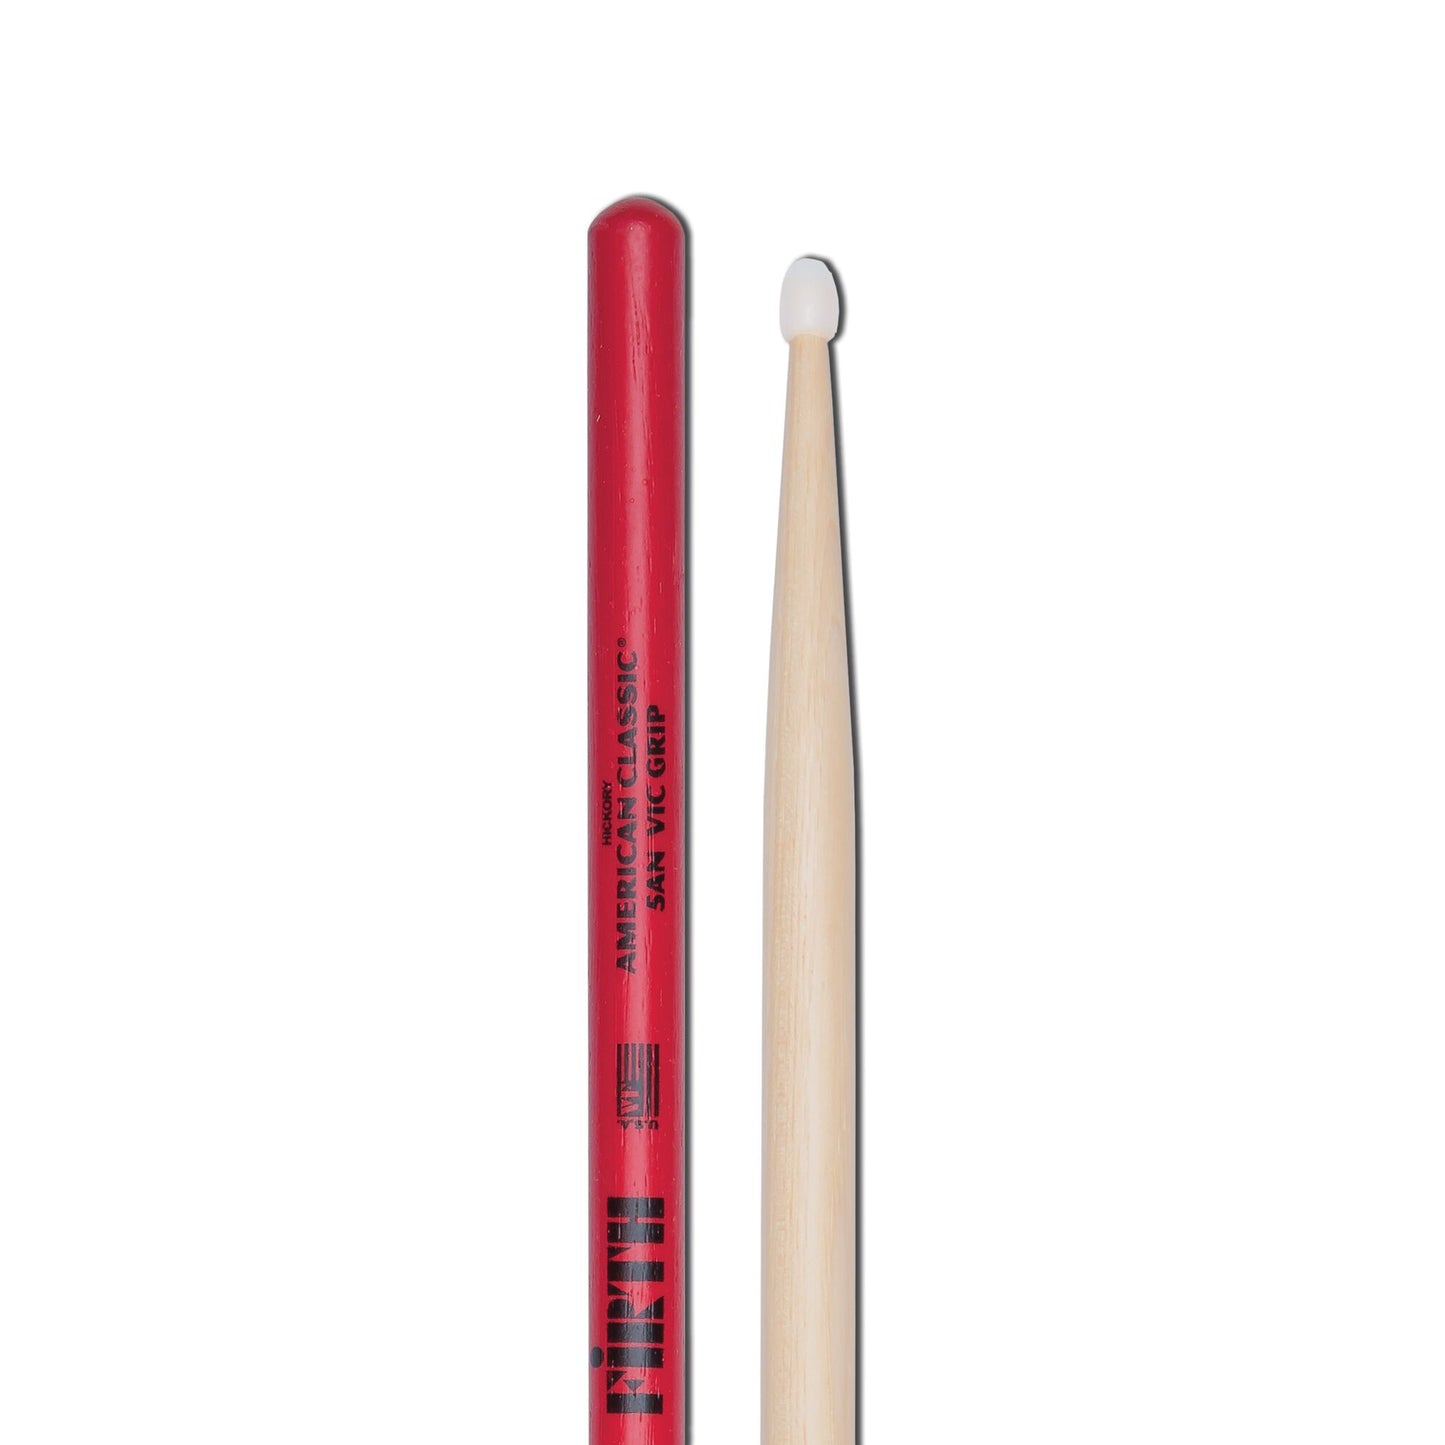 American Classic® 5A Nylon Vic Grip Drumsticks